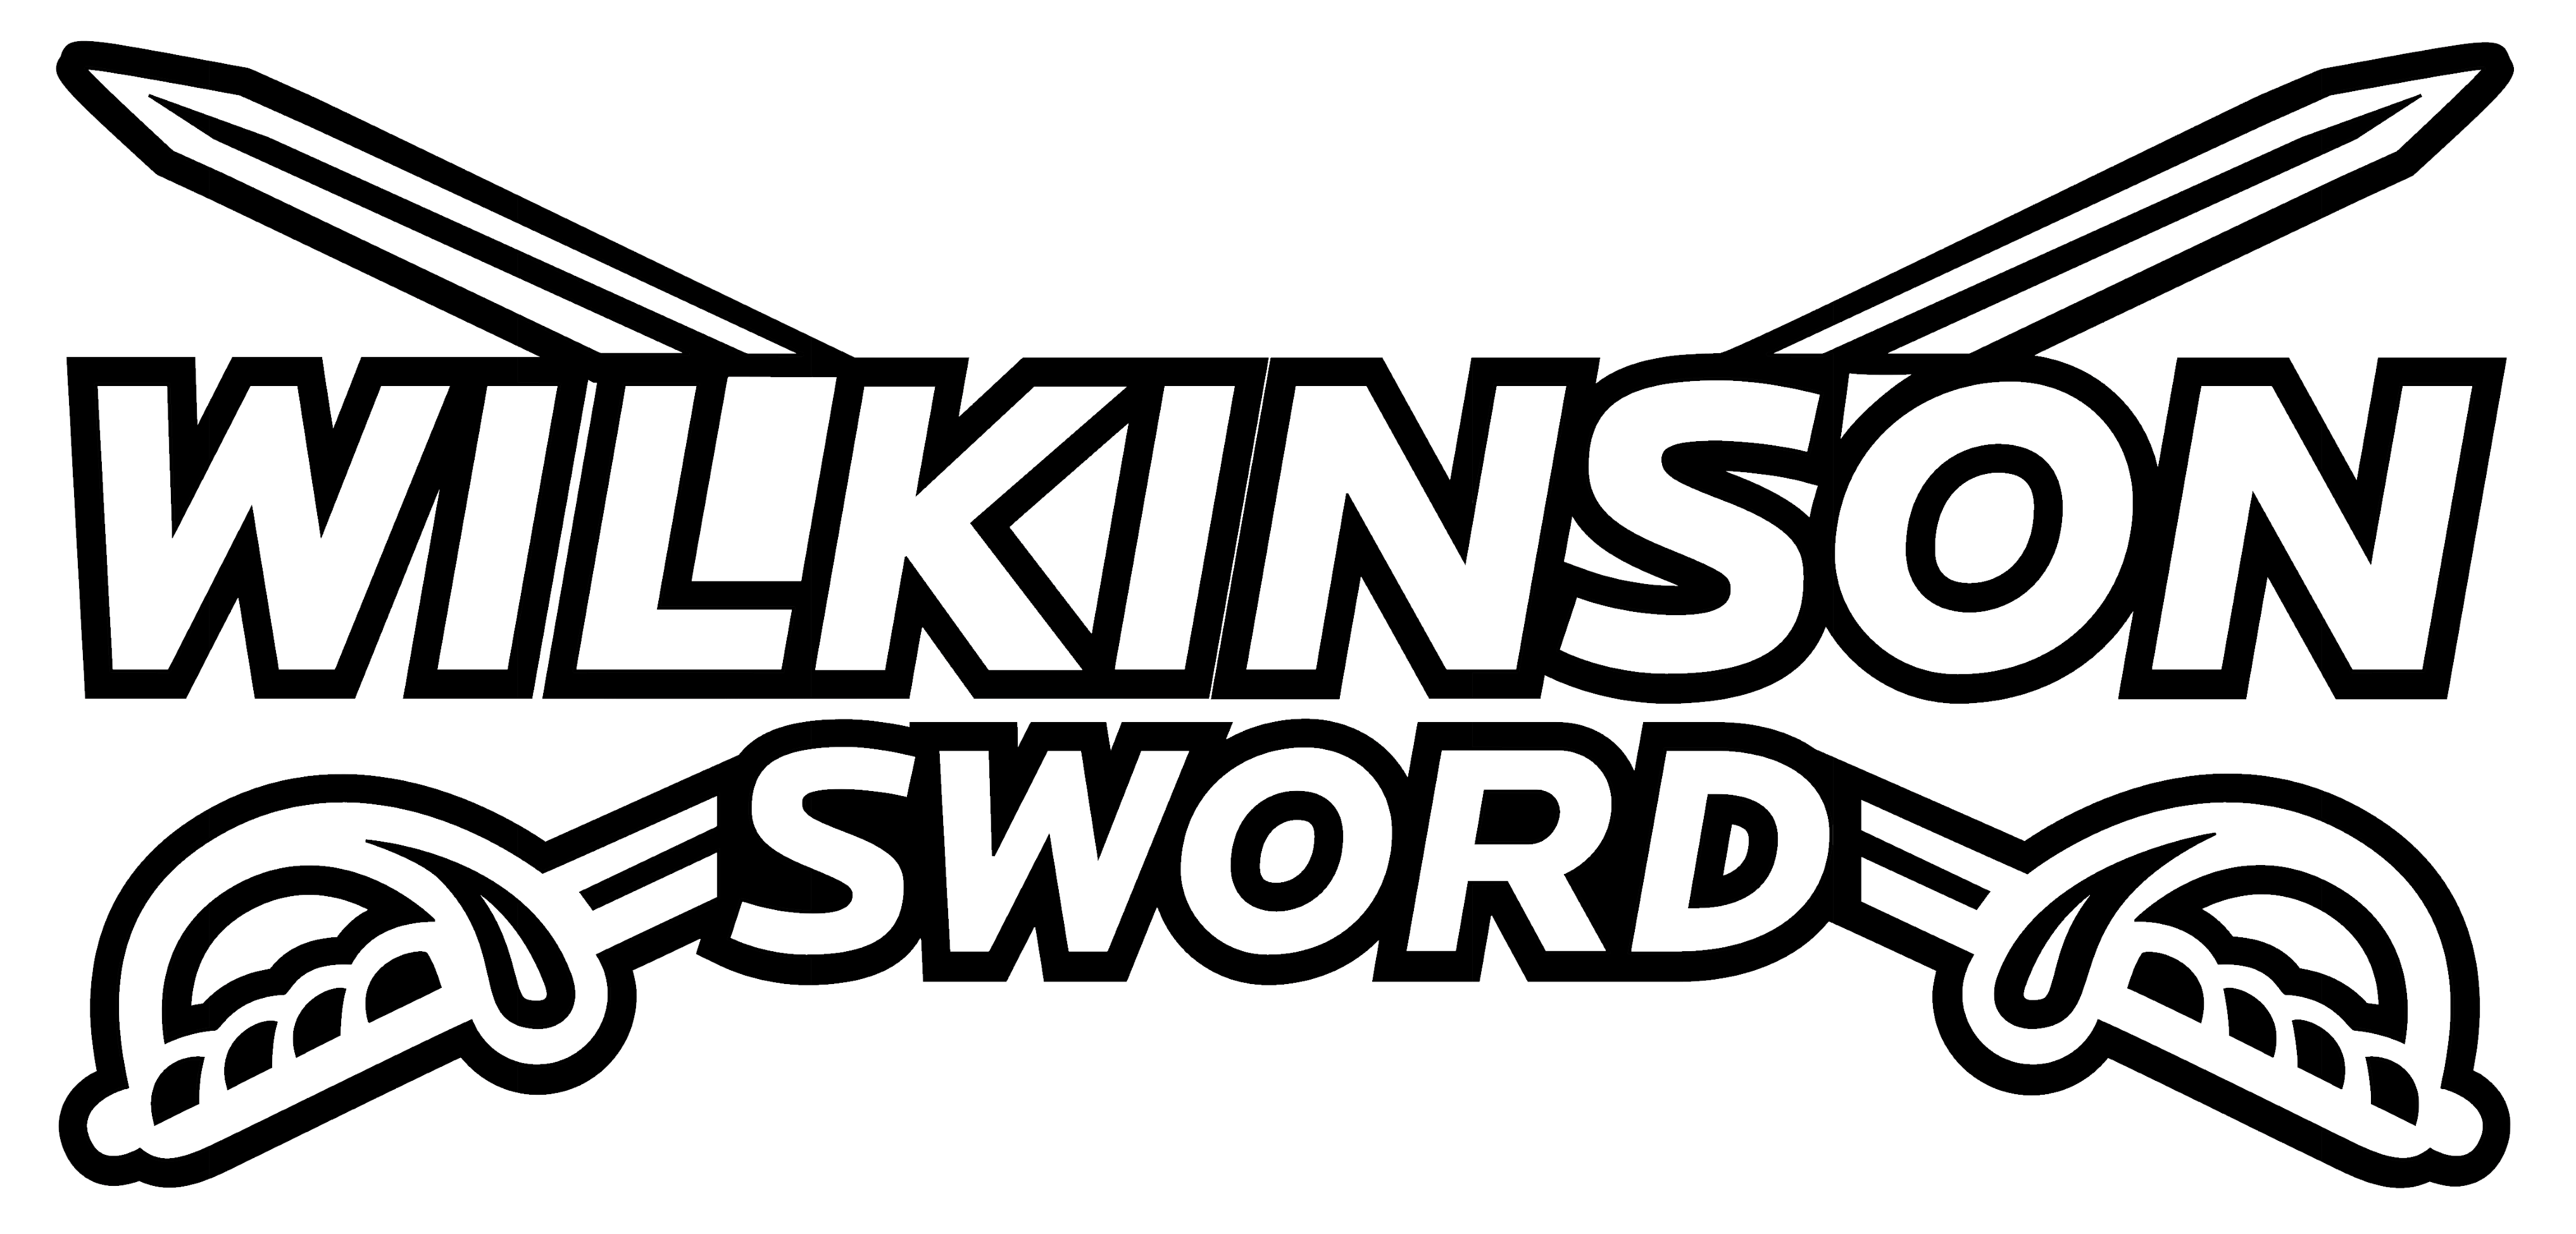 Wilkinson Sword logo, logotype